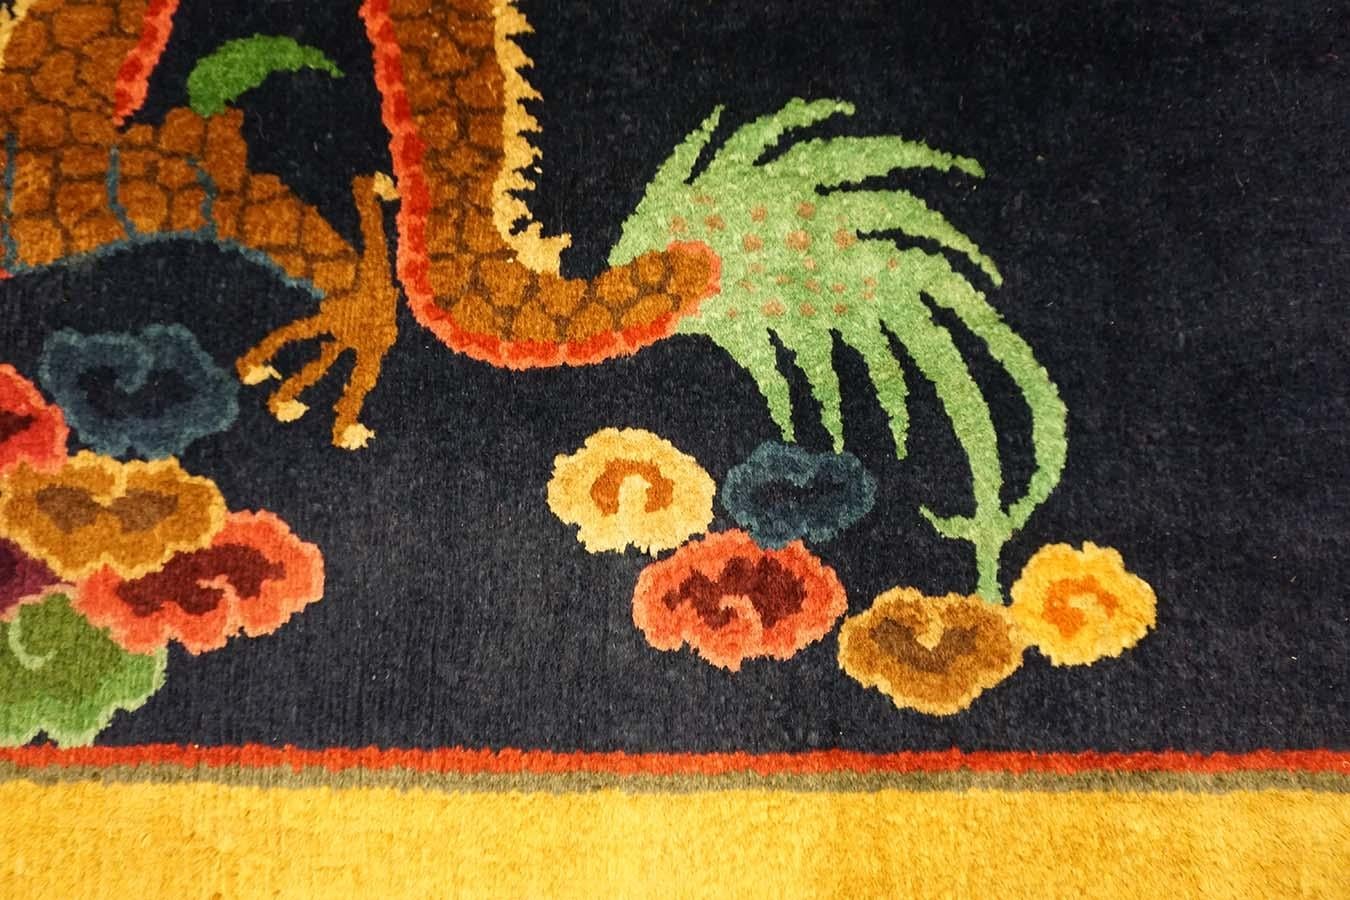 1920s Chinese Art Deco Carpet by Nichols Workshop (8'10'' x 11'6'' - 270 x 350) For Sale 3